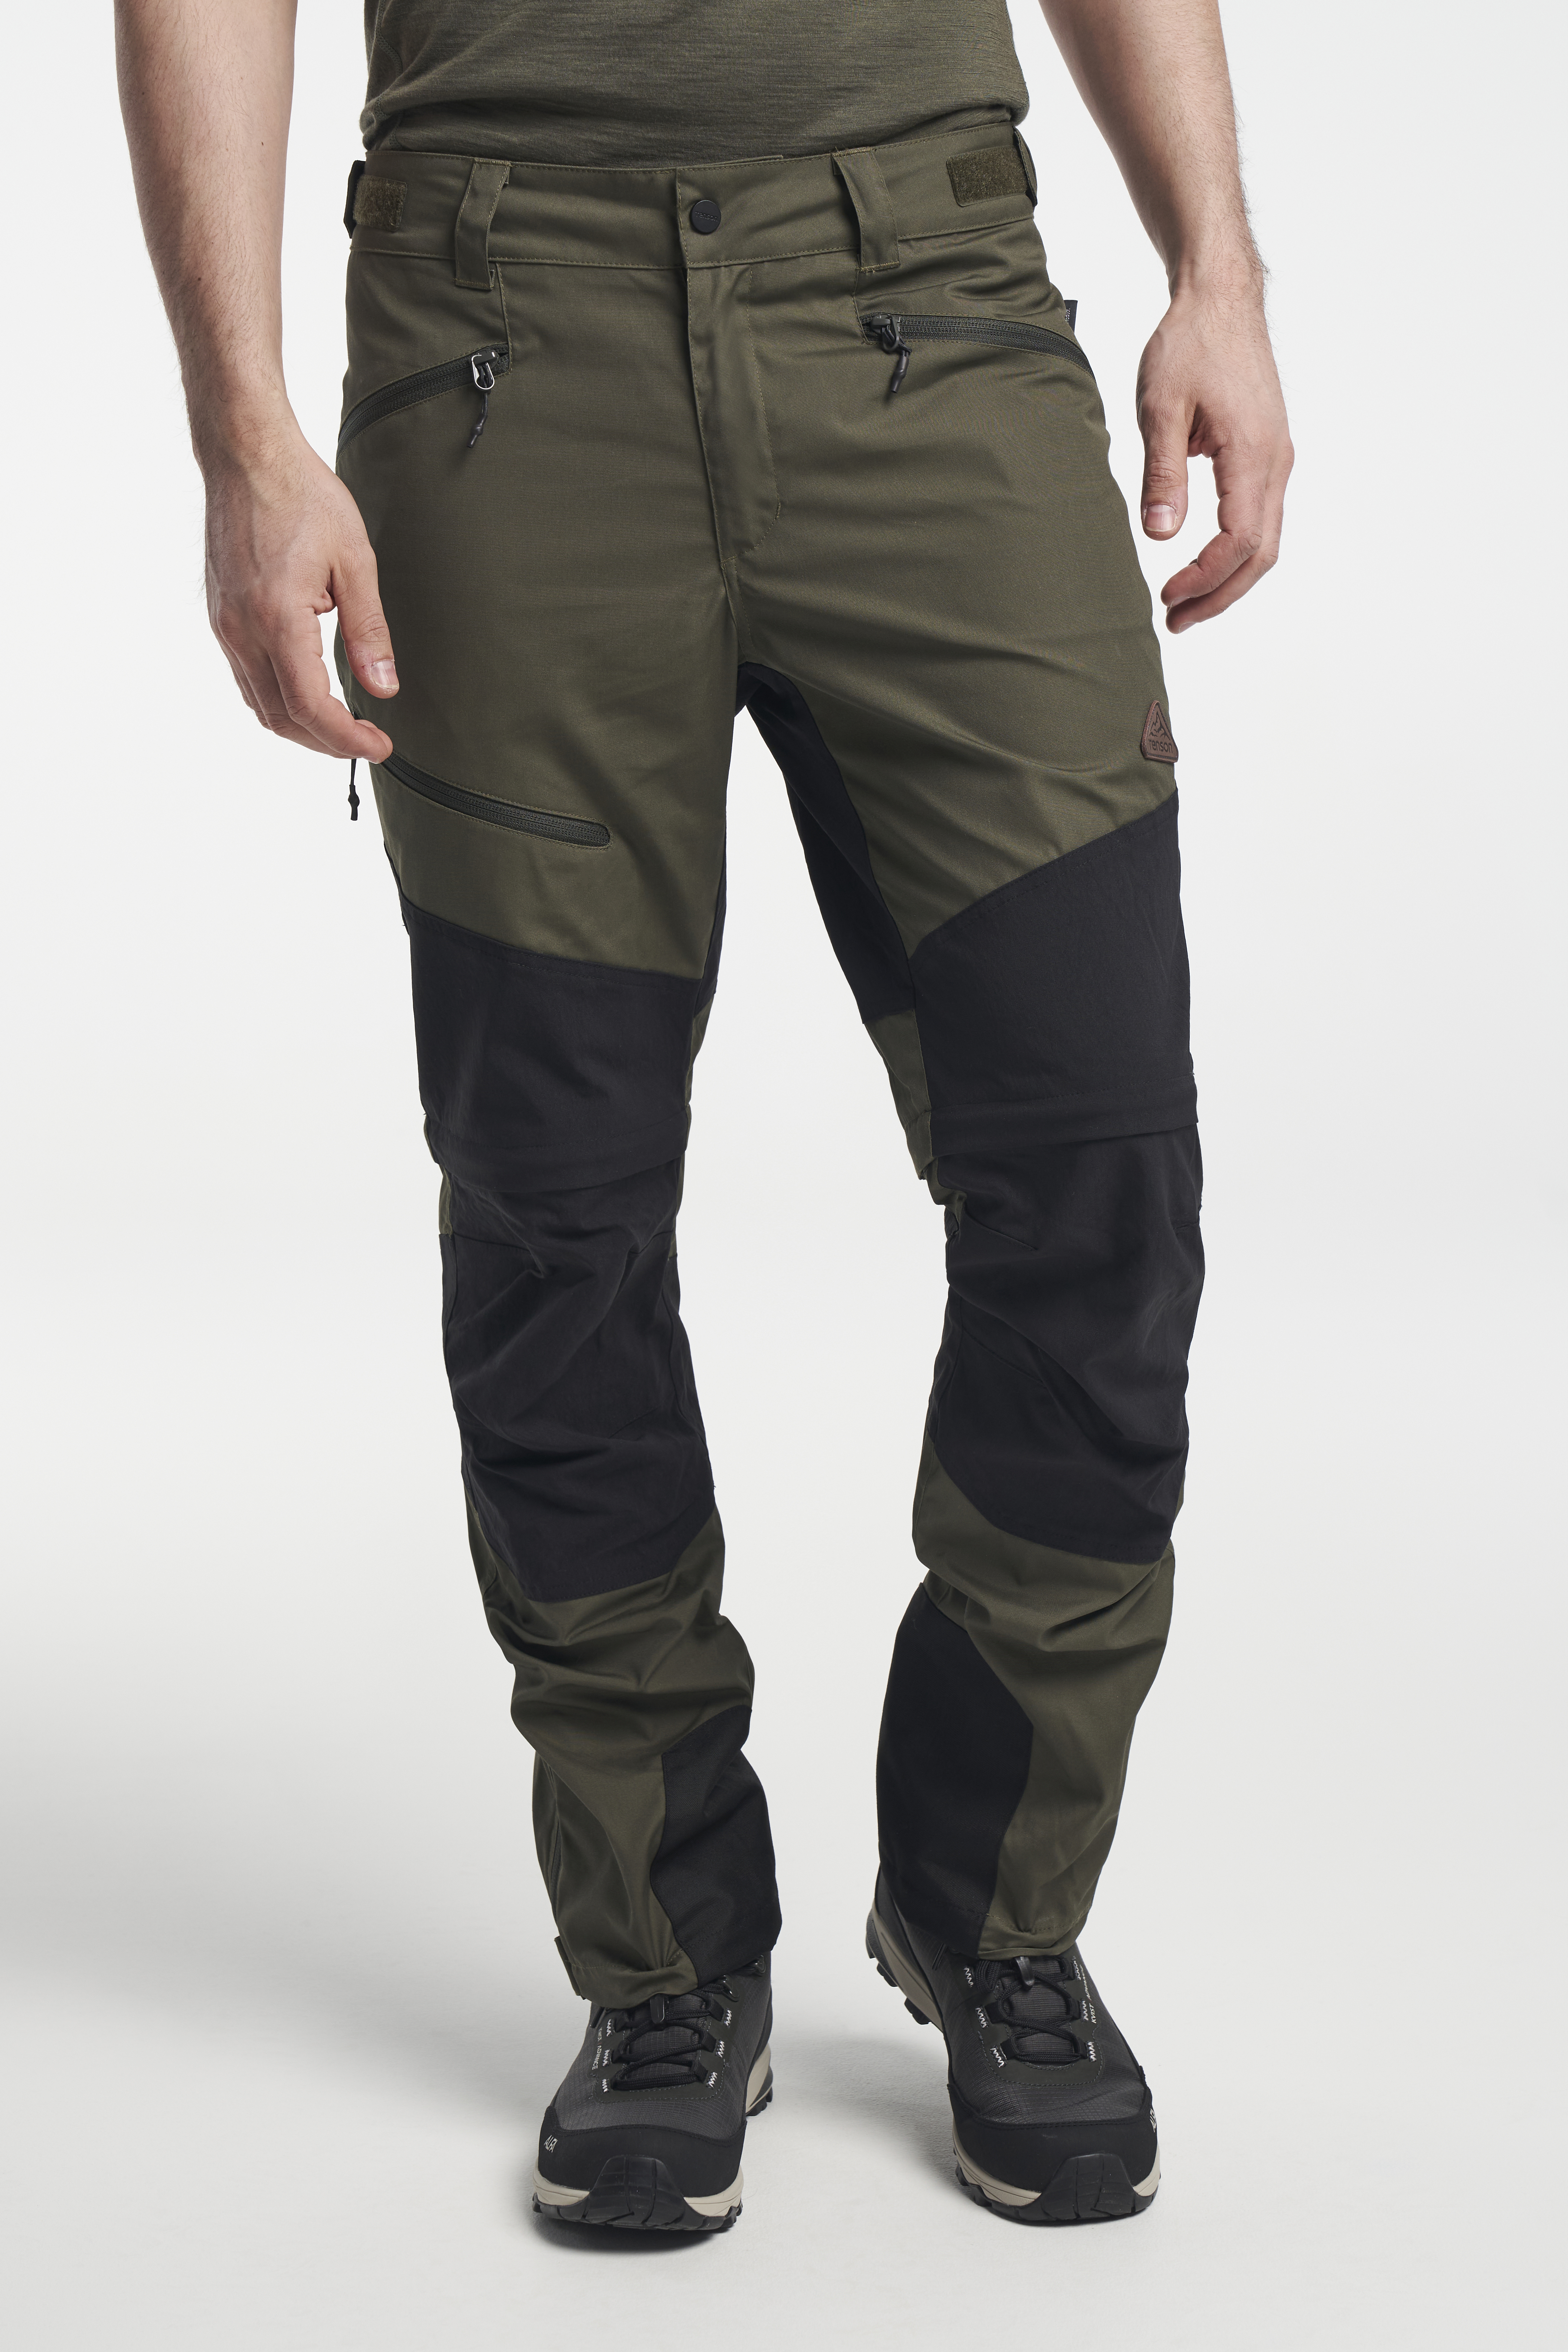 JNGSA Men's Assault Pants with Multi-Pocket Outdoor Sports Hiking Pants  Lightweight Cotton Cargo Stretch Trousers Black XXXL - Walmart.com